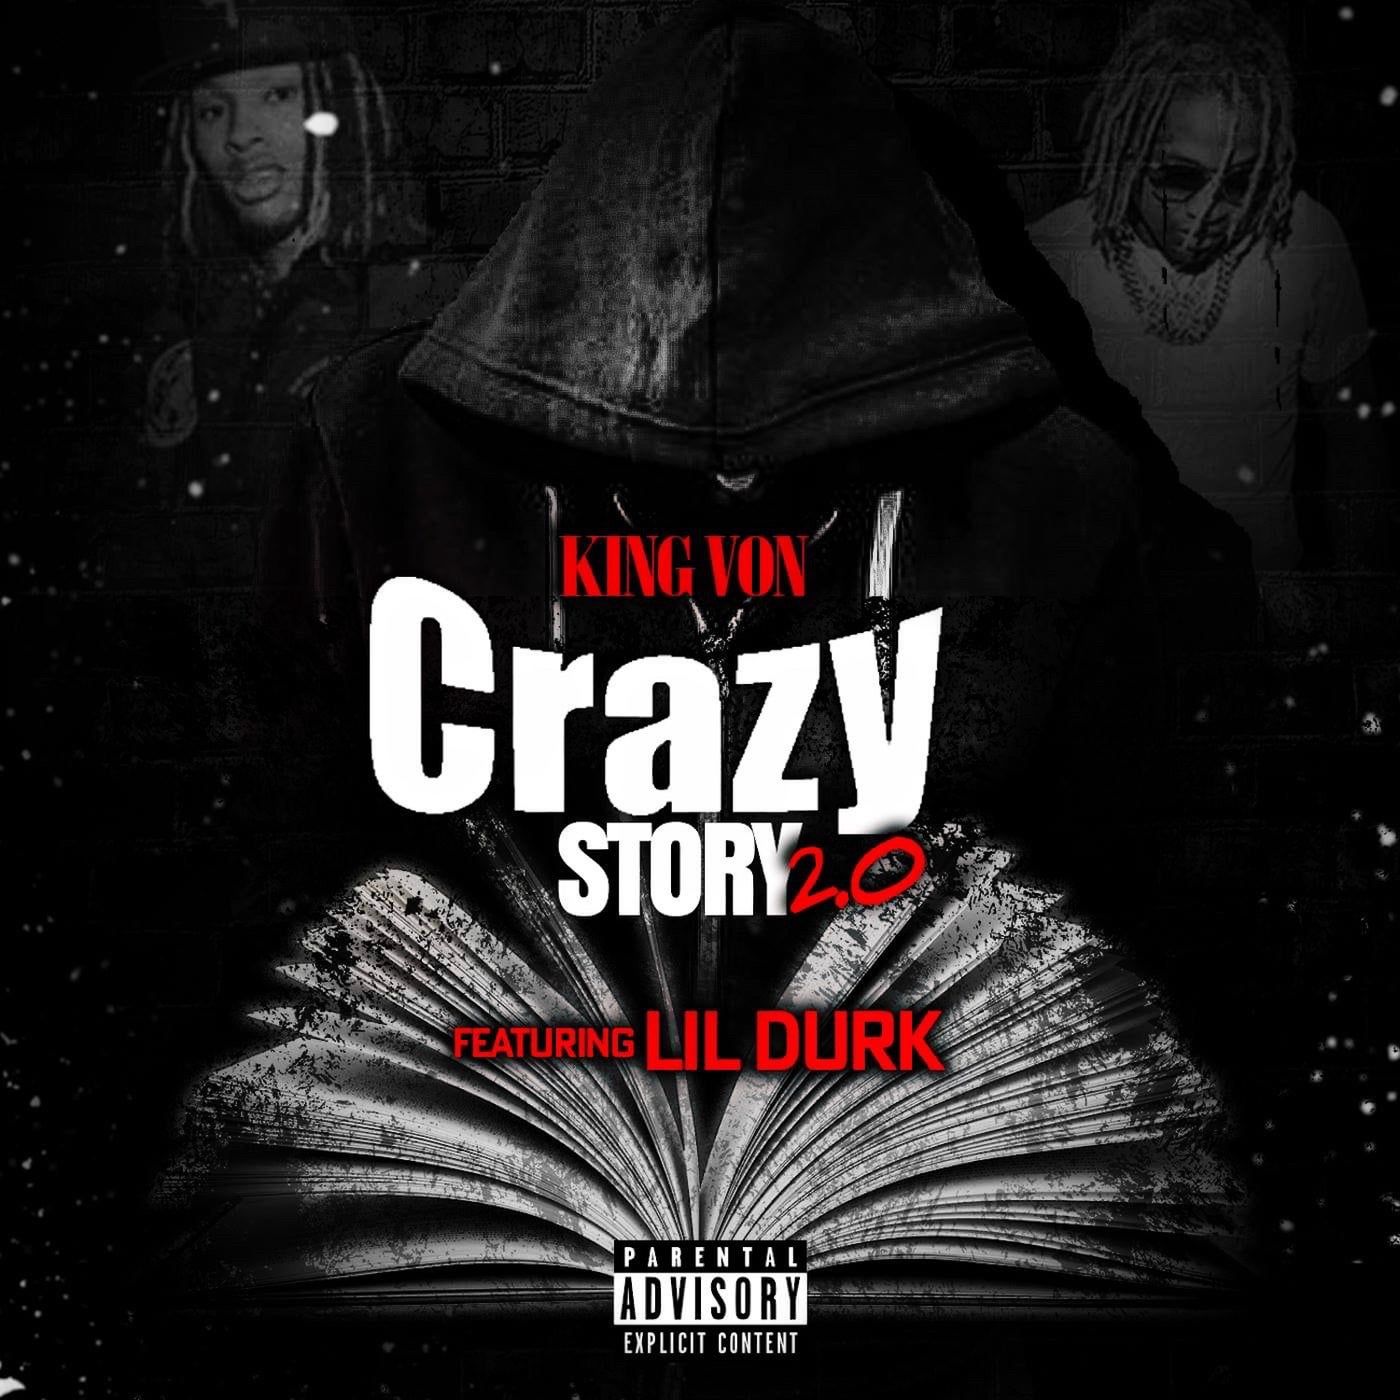 Lil Durk - CRAZY STORY @ 10 MILLION VIEWS ON